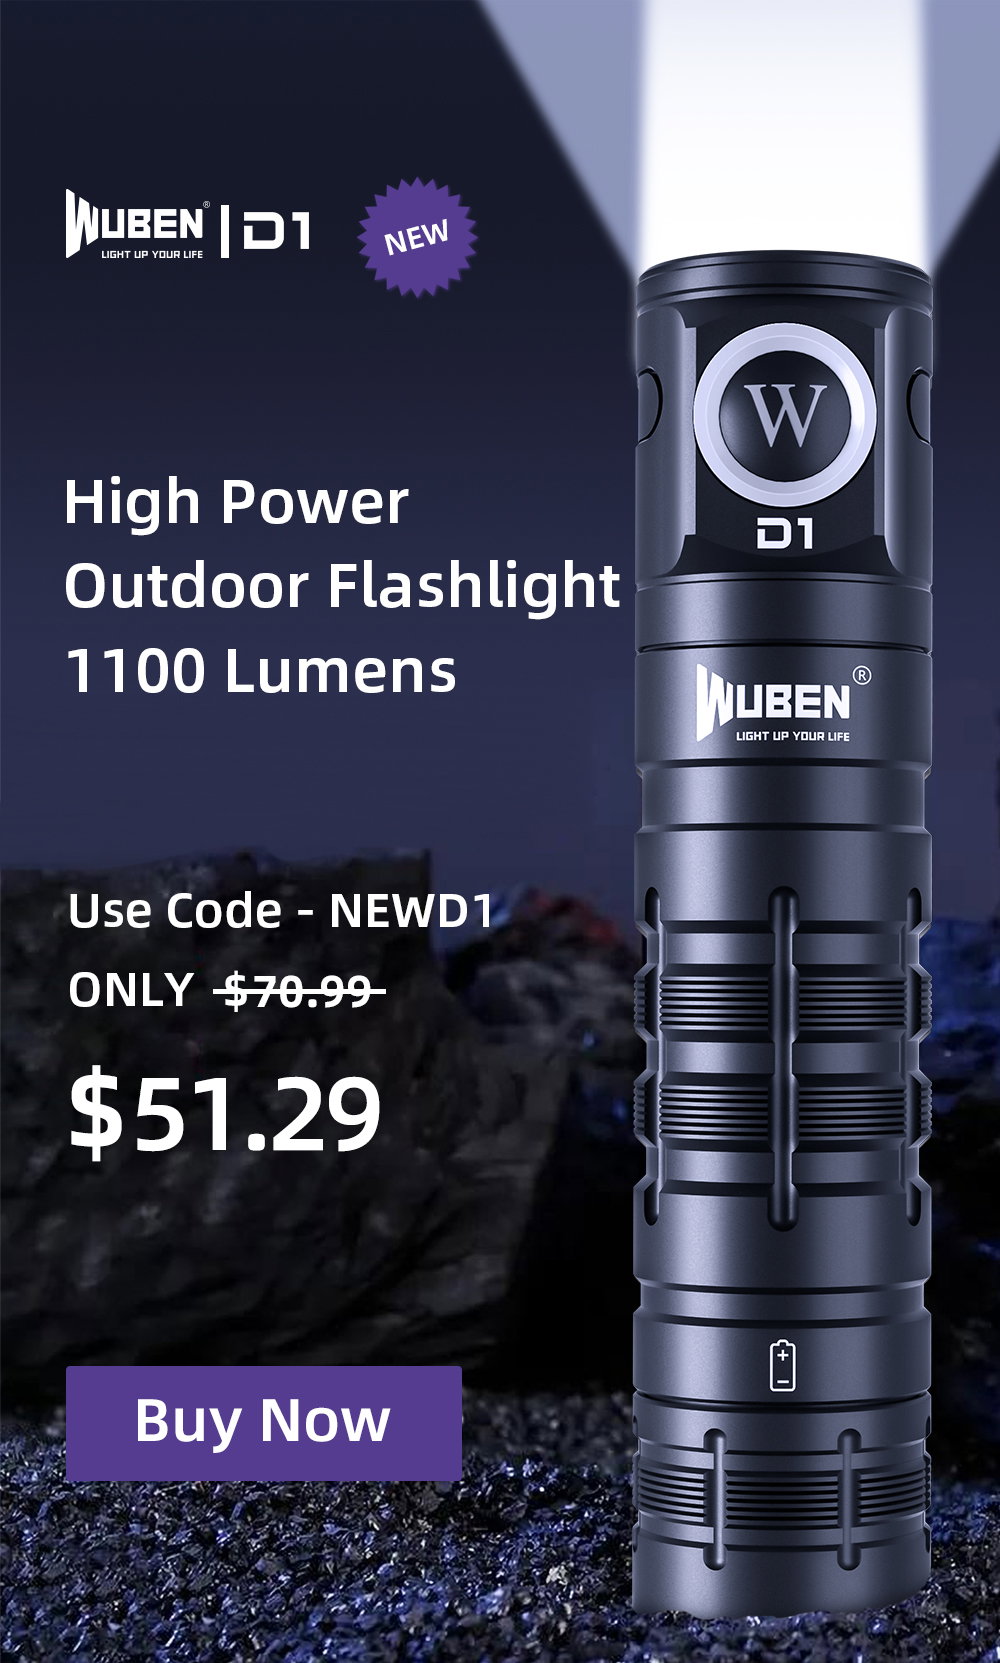 Wuben X3 EDC Flashlight, Born for Ultralight Outdoors by WUBEN — Kickstarter